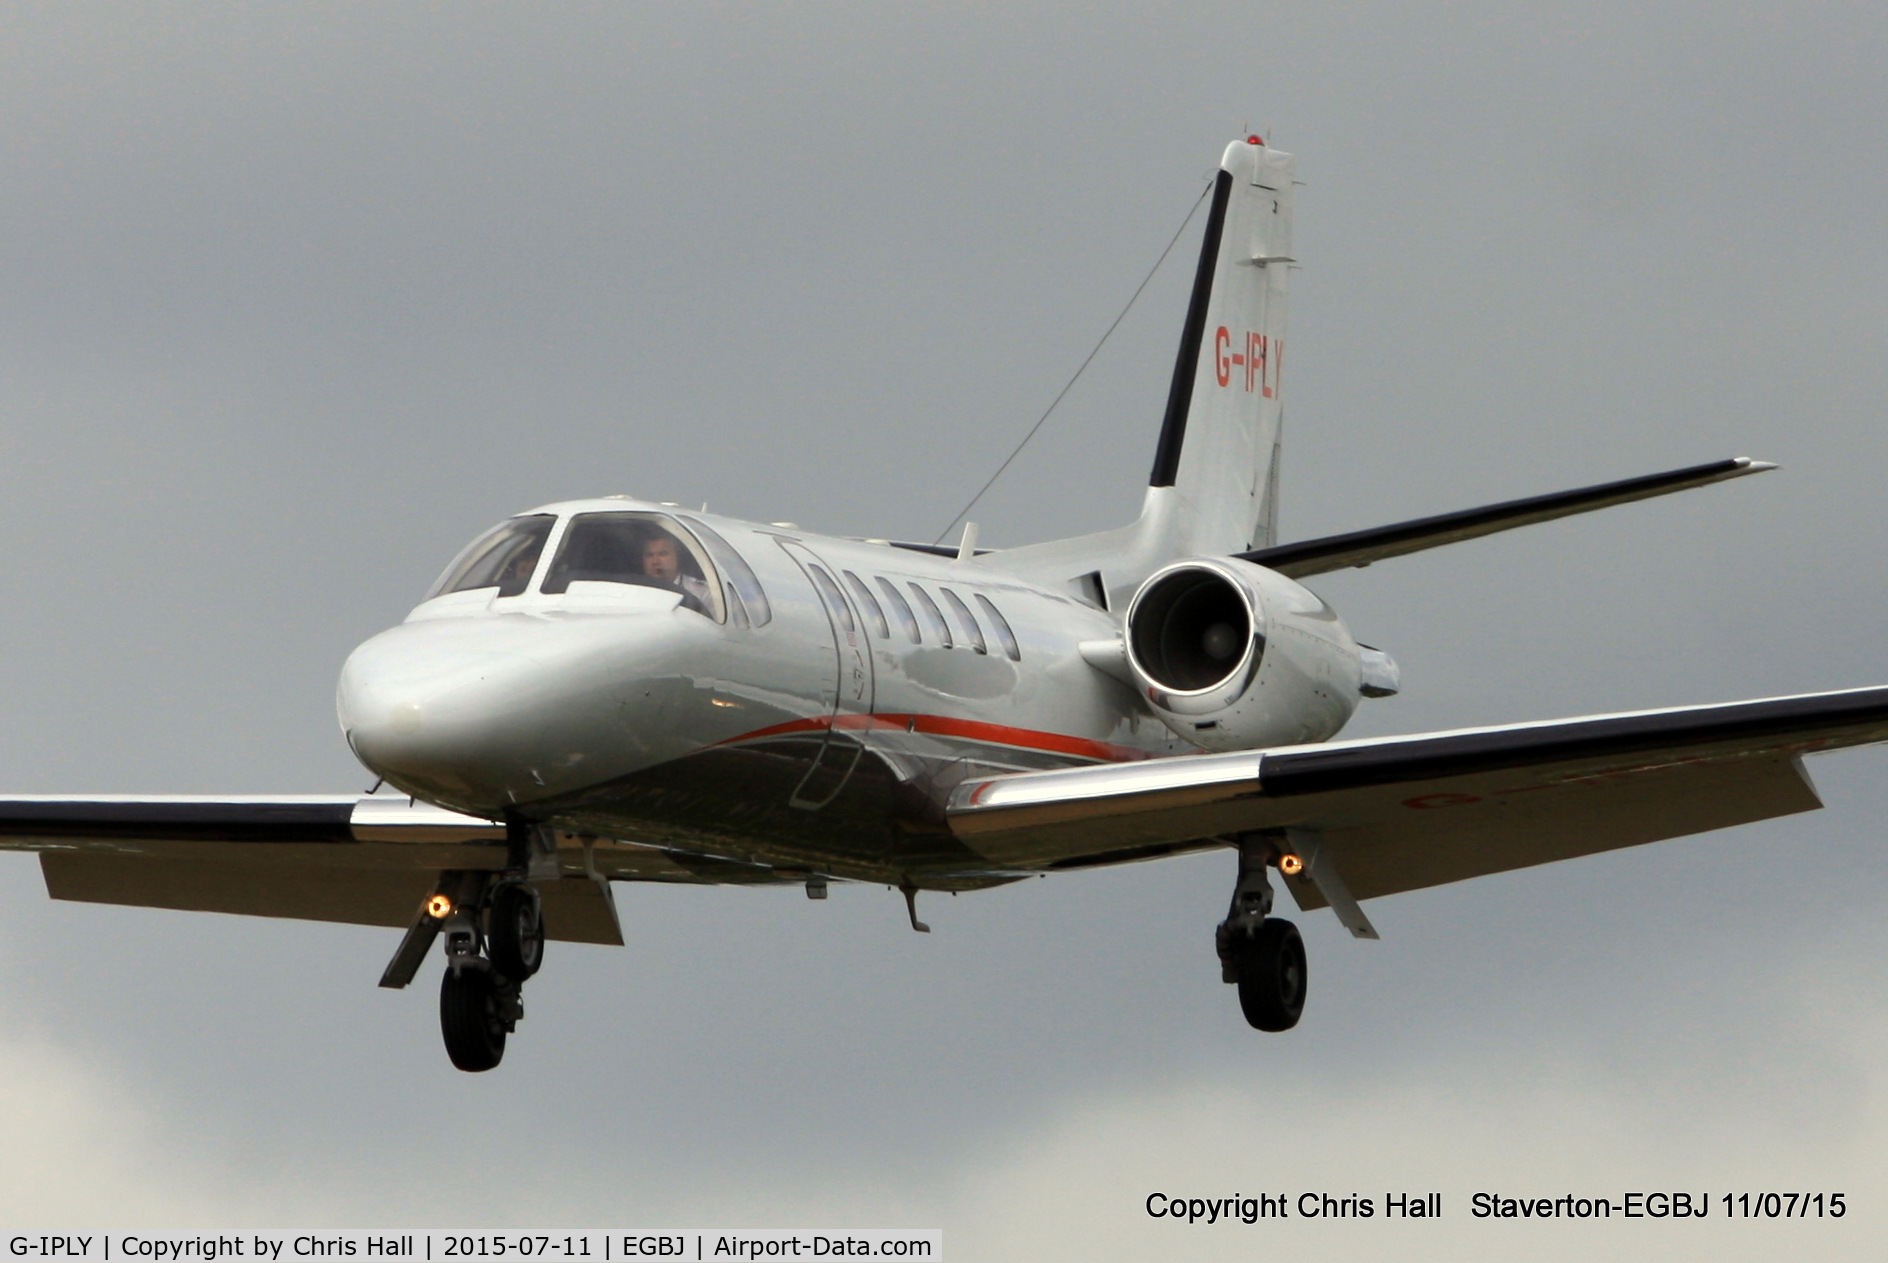 G-IPLY, 2000 Cessna 550 Citation Bravo C/N 550-0927, on finals at Staverton